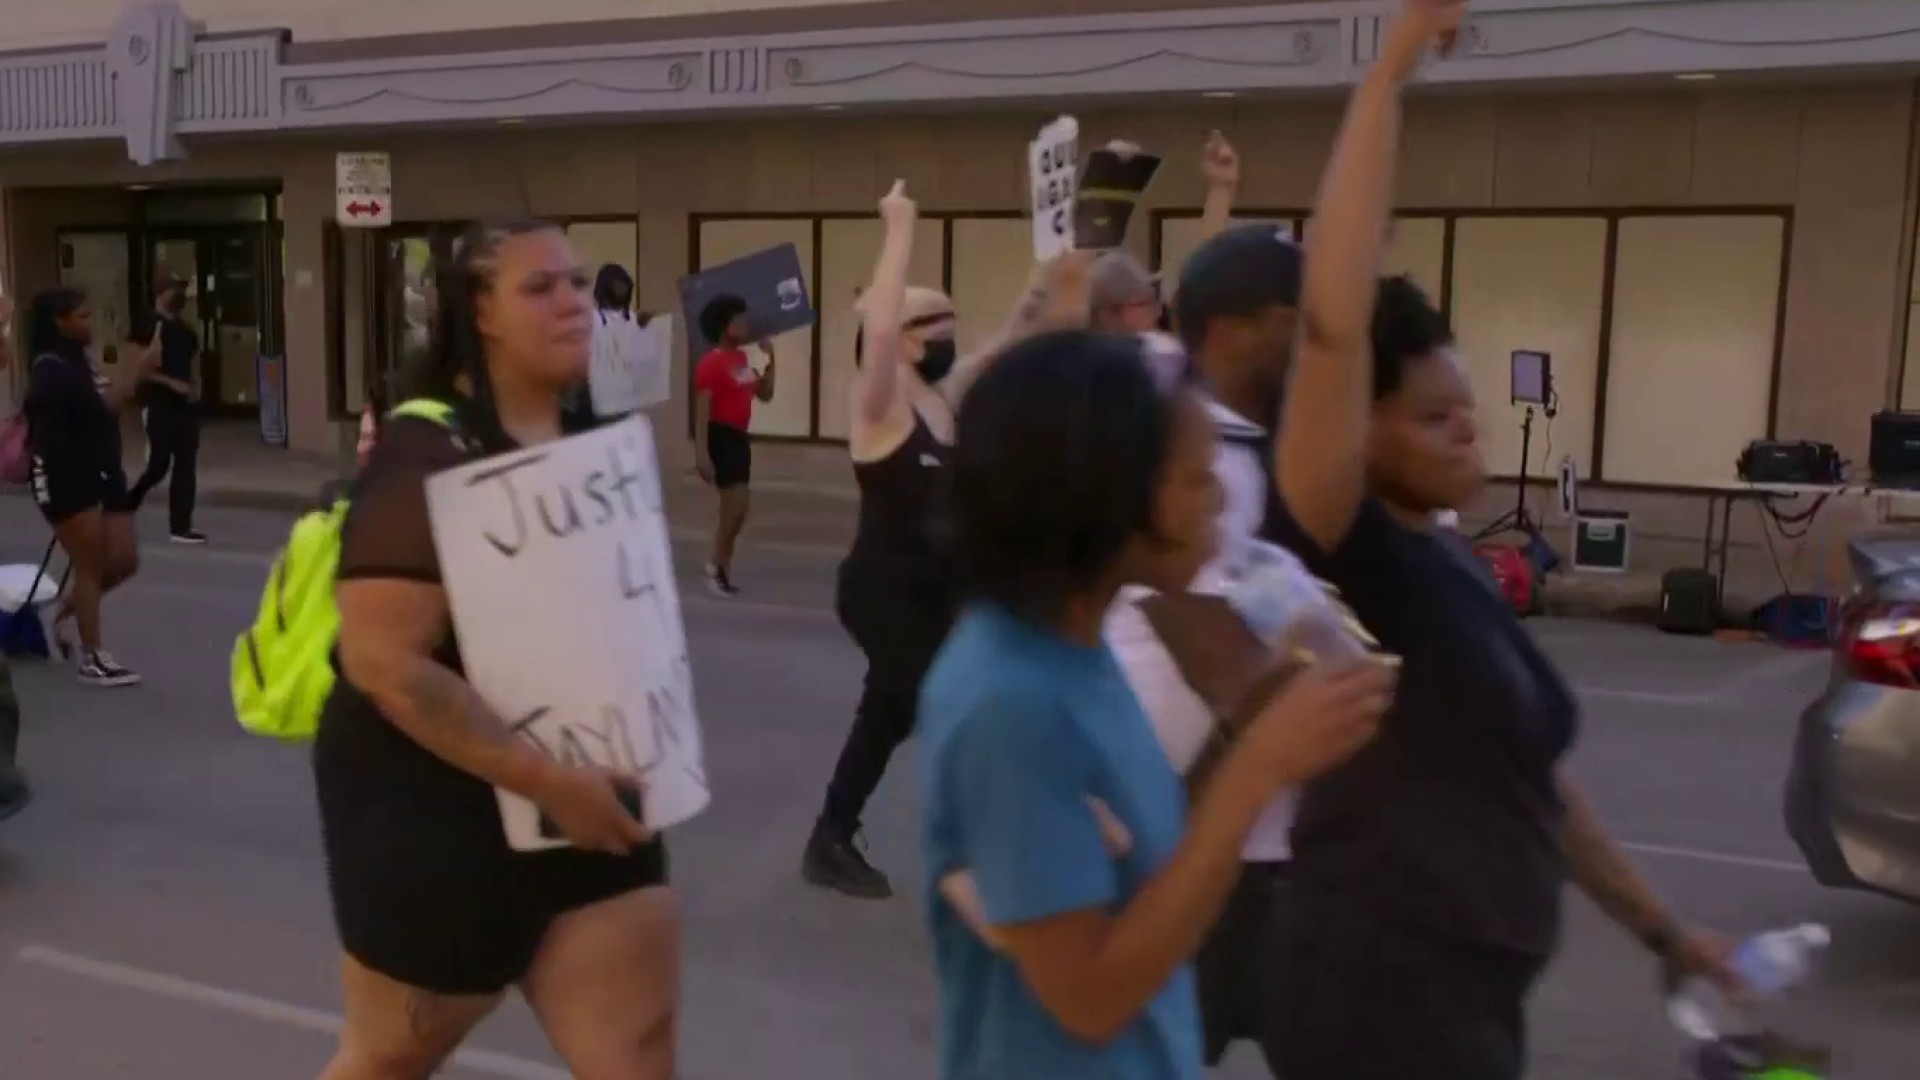 Protesters demand justice after bodycam video released shows fatal shooting of Jayland Walker 